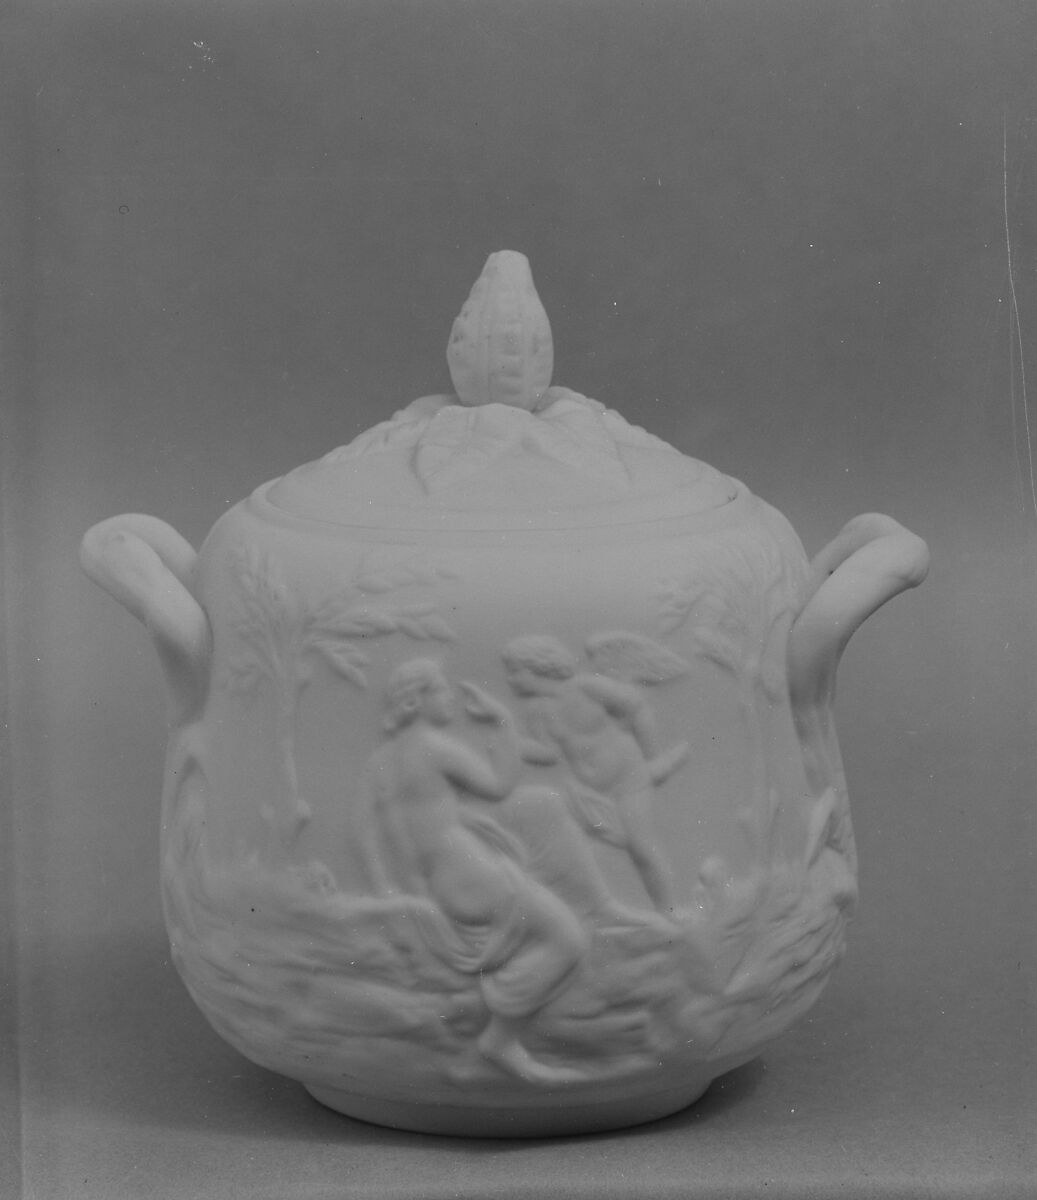 Sugar Bowl, Parian porcelain, American 